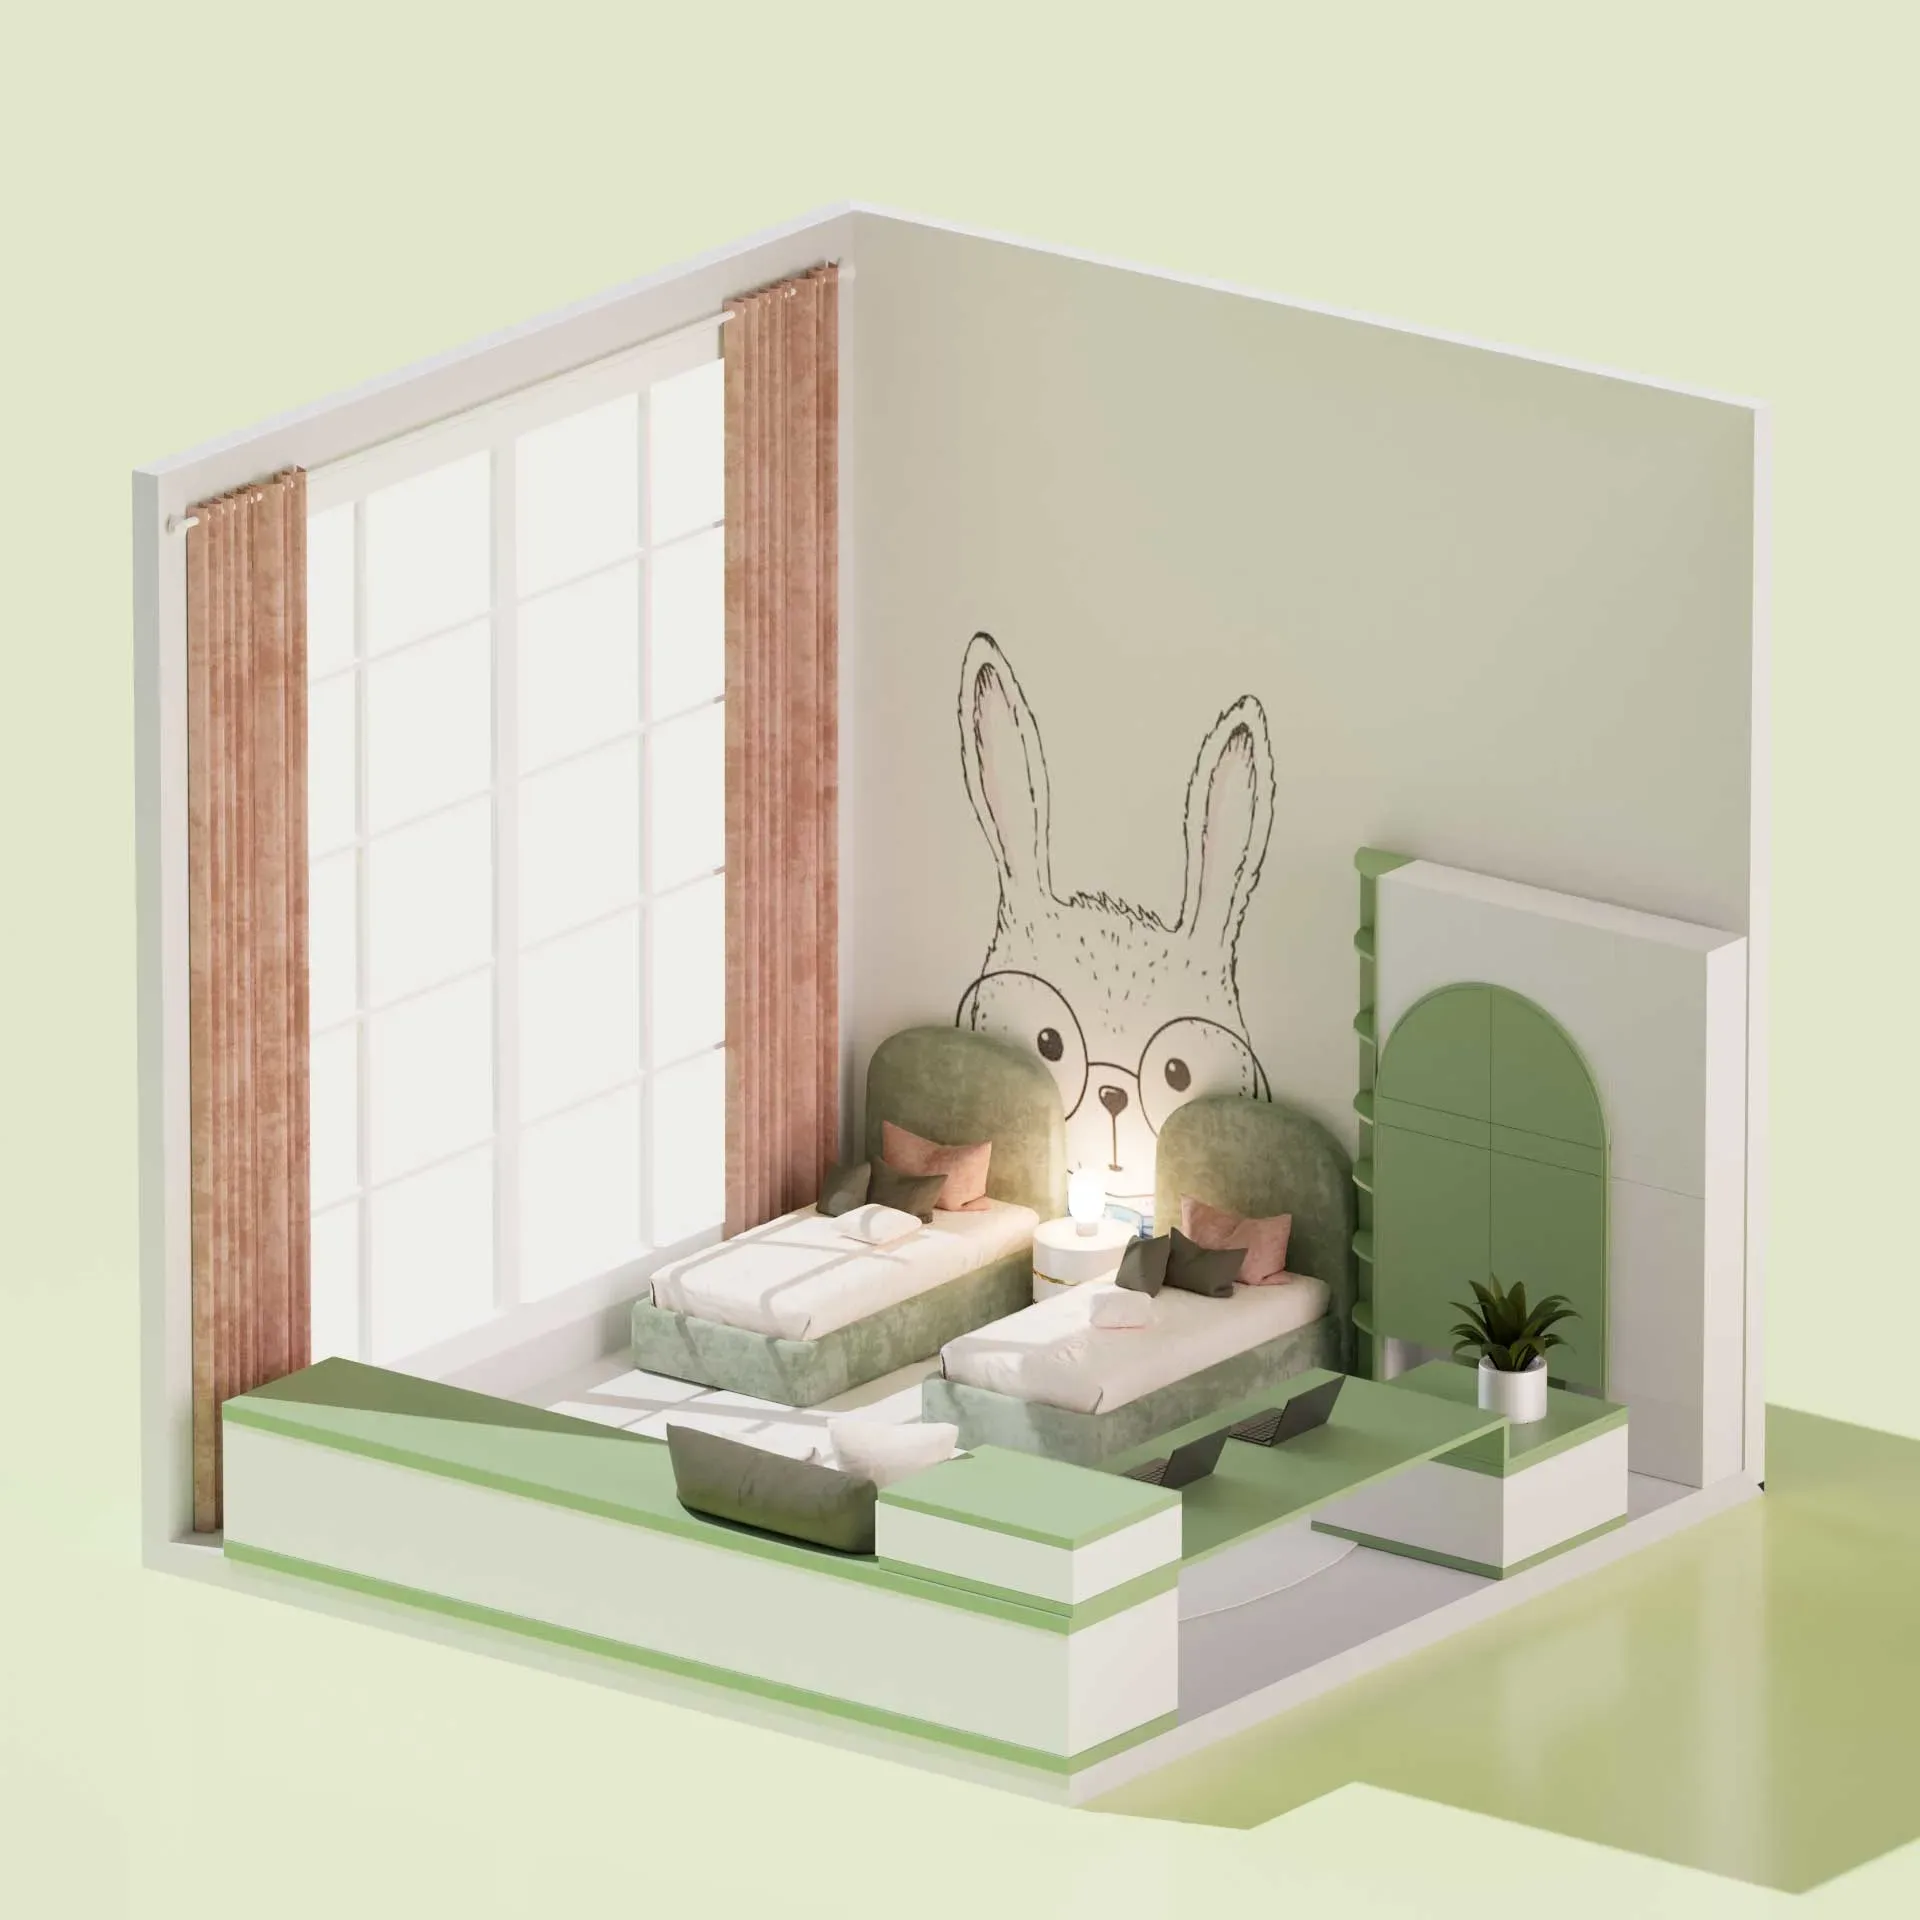 Lowpoly Interior Room 3D Model Pack - Kitchen, Bedroom, Bathroom, Living Room